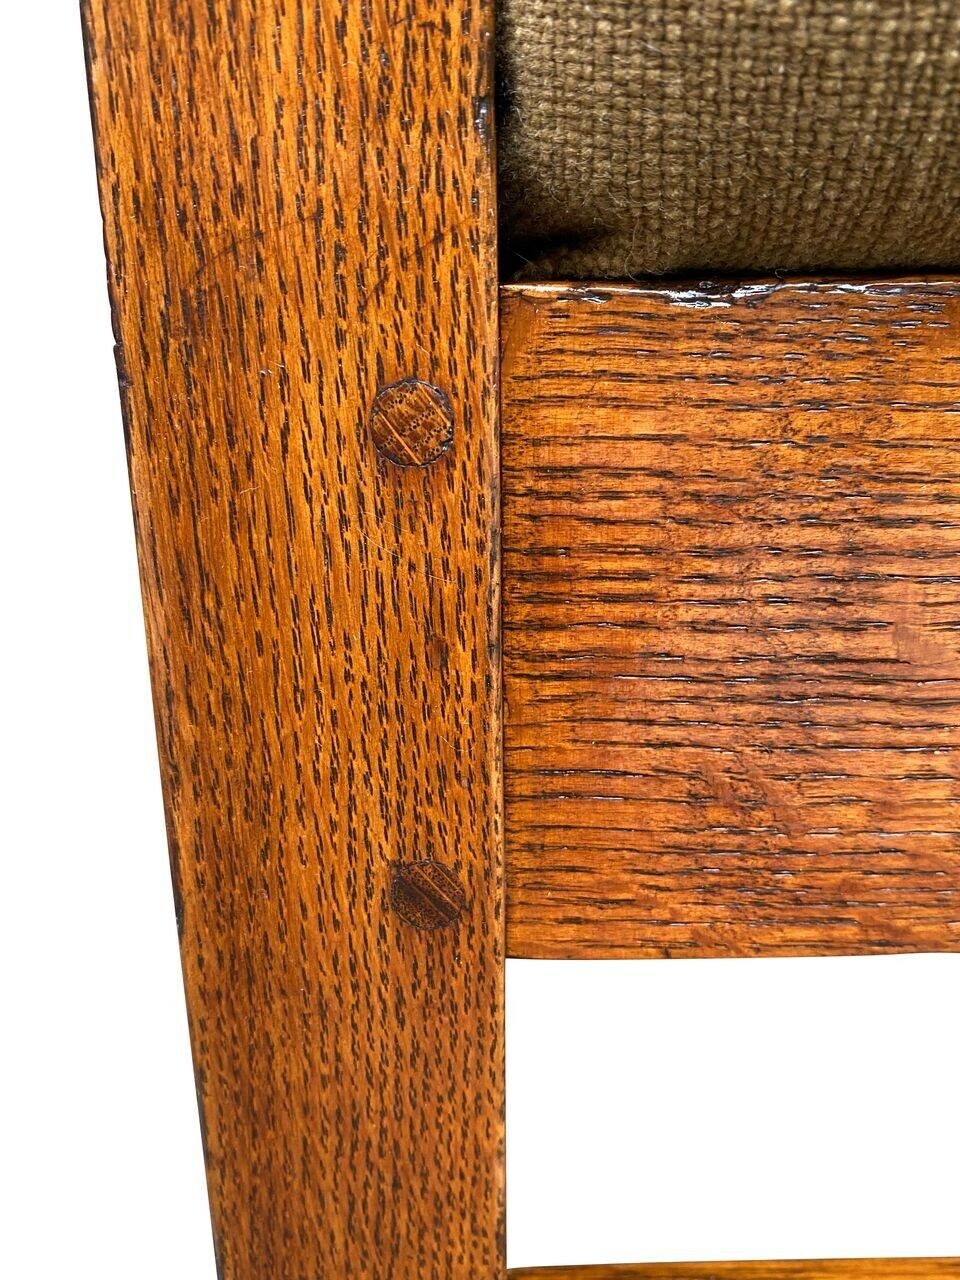 20th C Antique Arts & Crafts L & Jg Stickley Slatted Arm Chair ~ Model #450